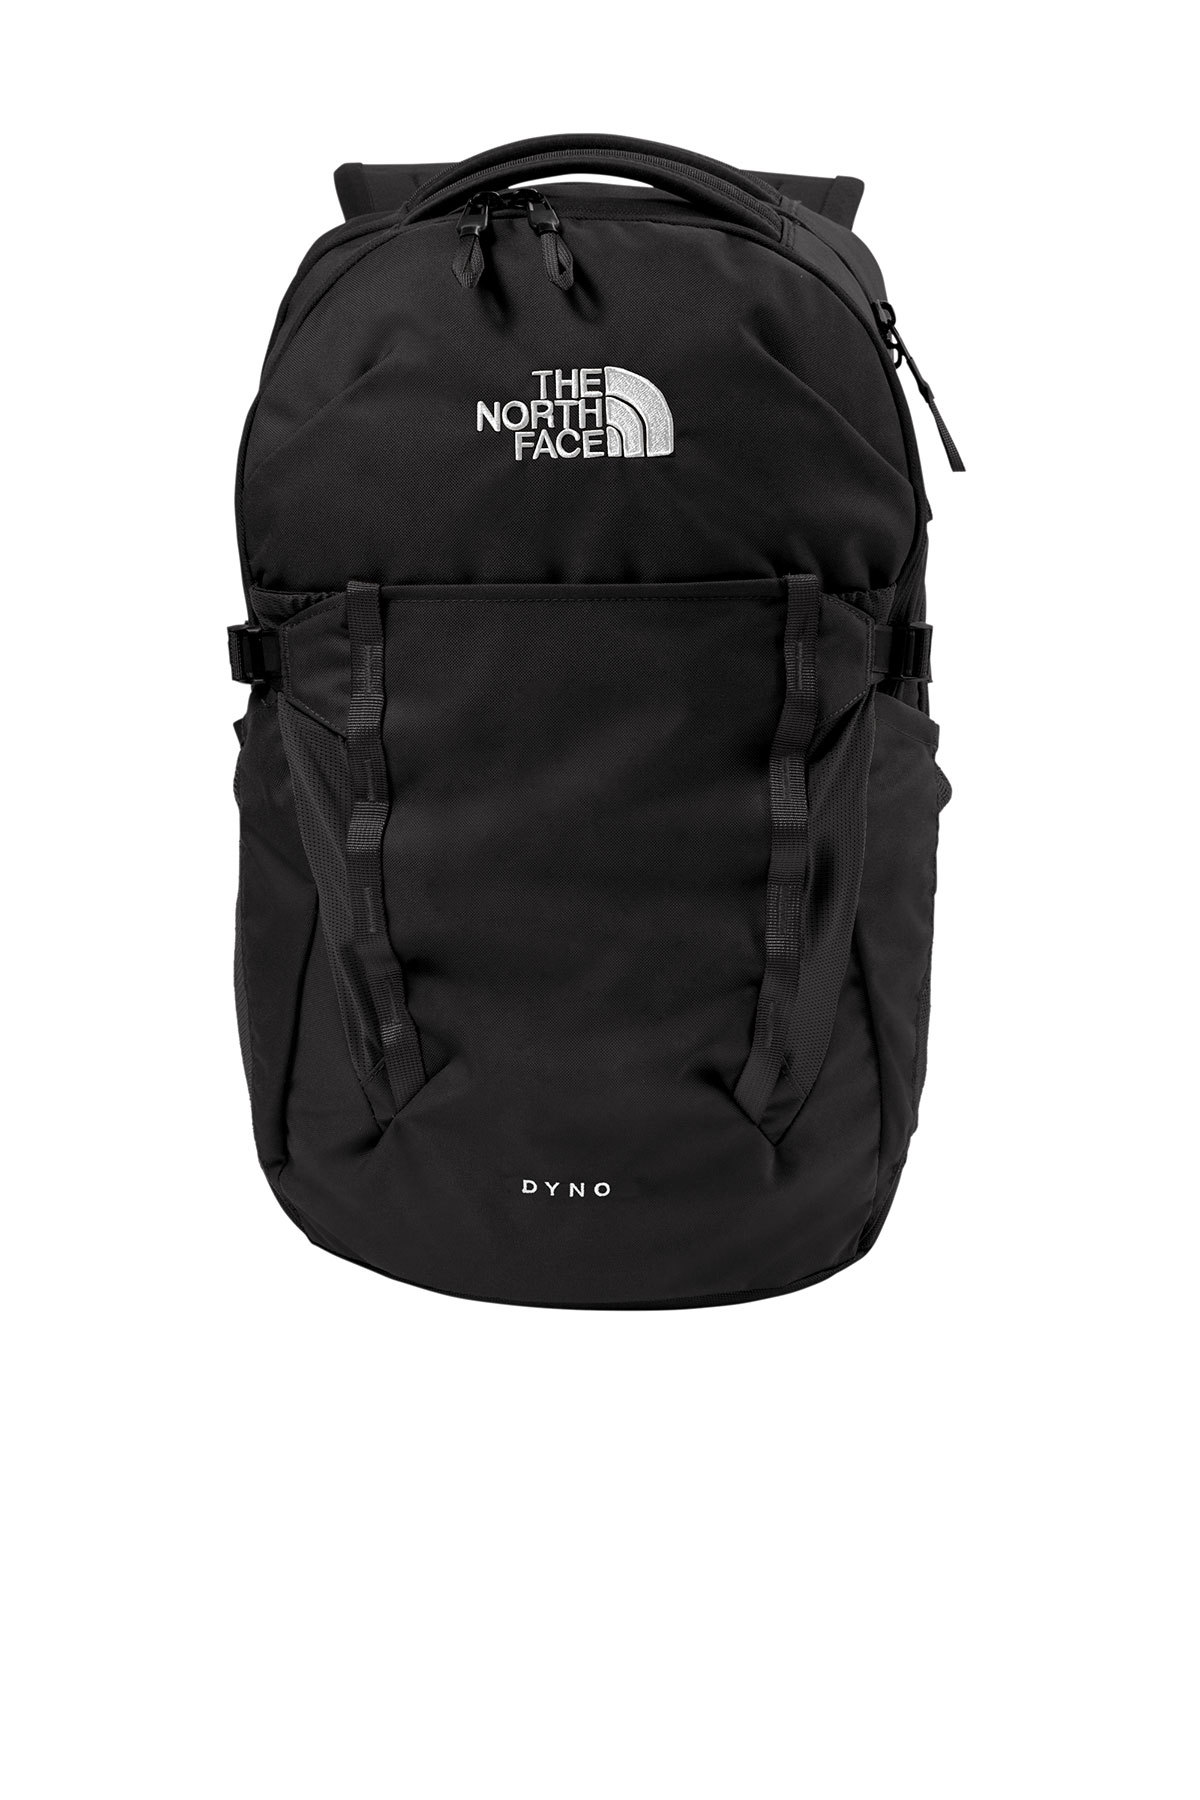 north face laptop bag